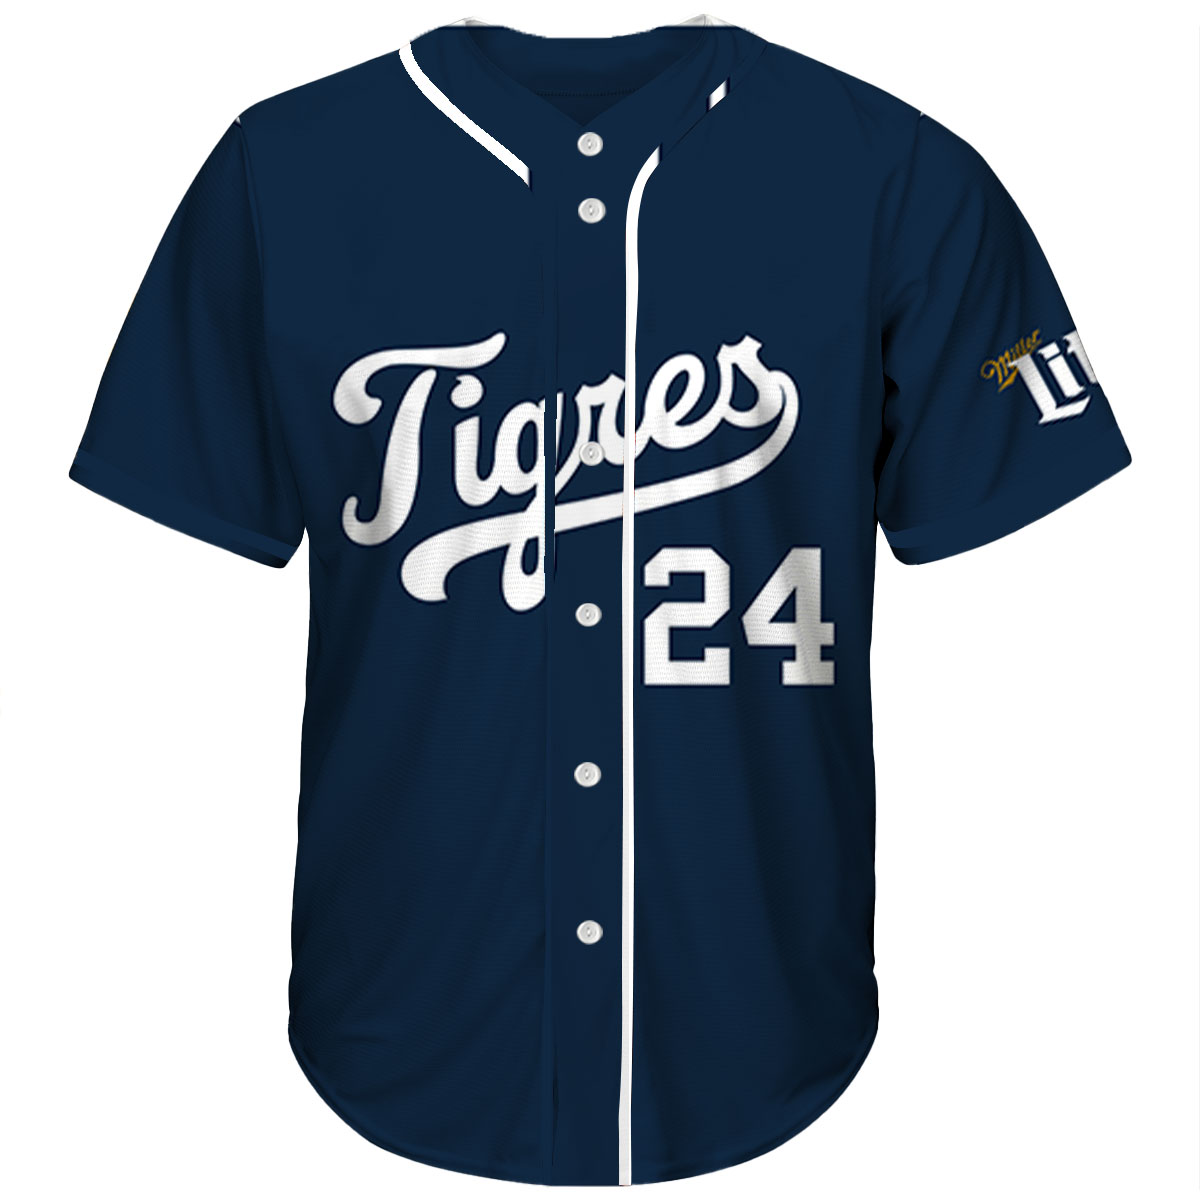 True Fan Detroit Tigers Blue/Black MLB Jersey Shirt Large